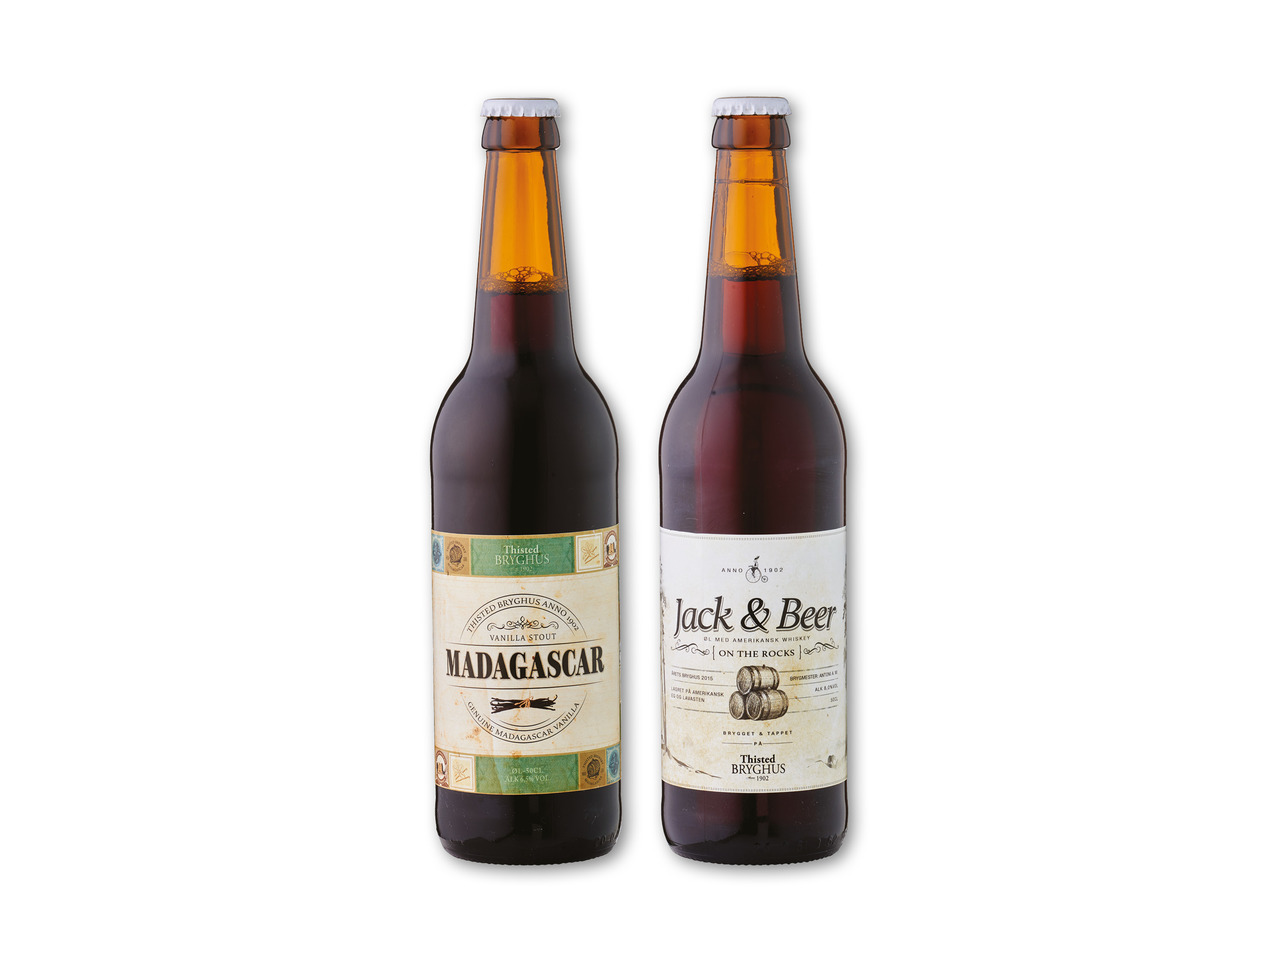 THISTED BRYGHUS Madagascar/Jack & Beer1